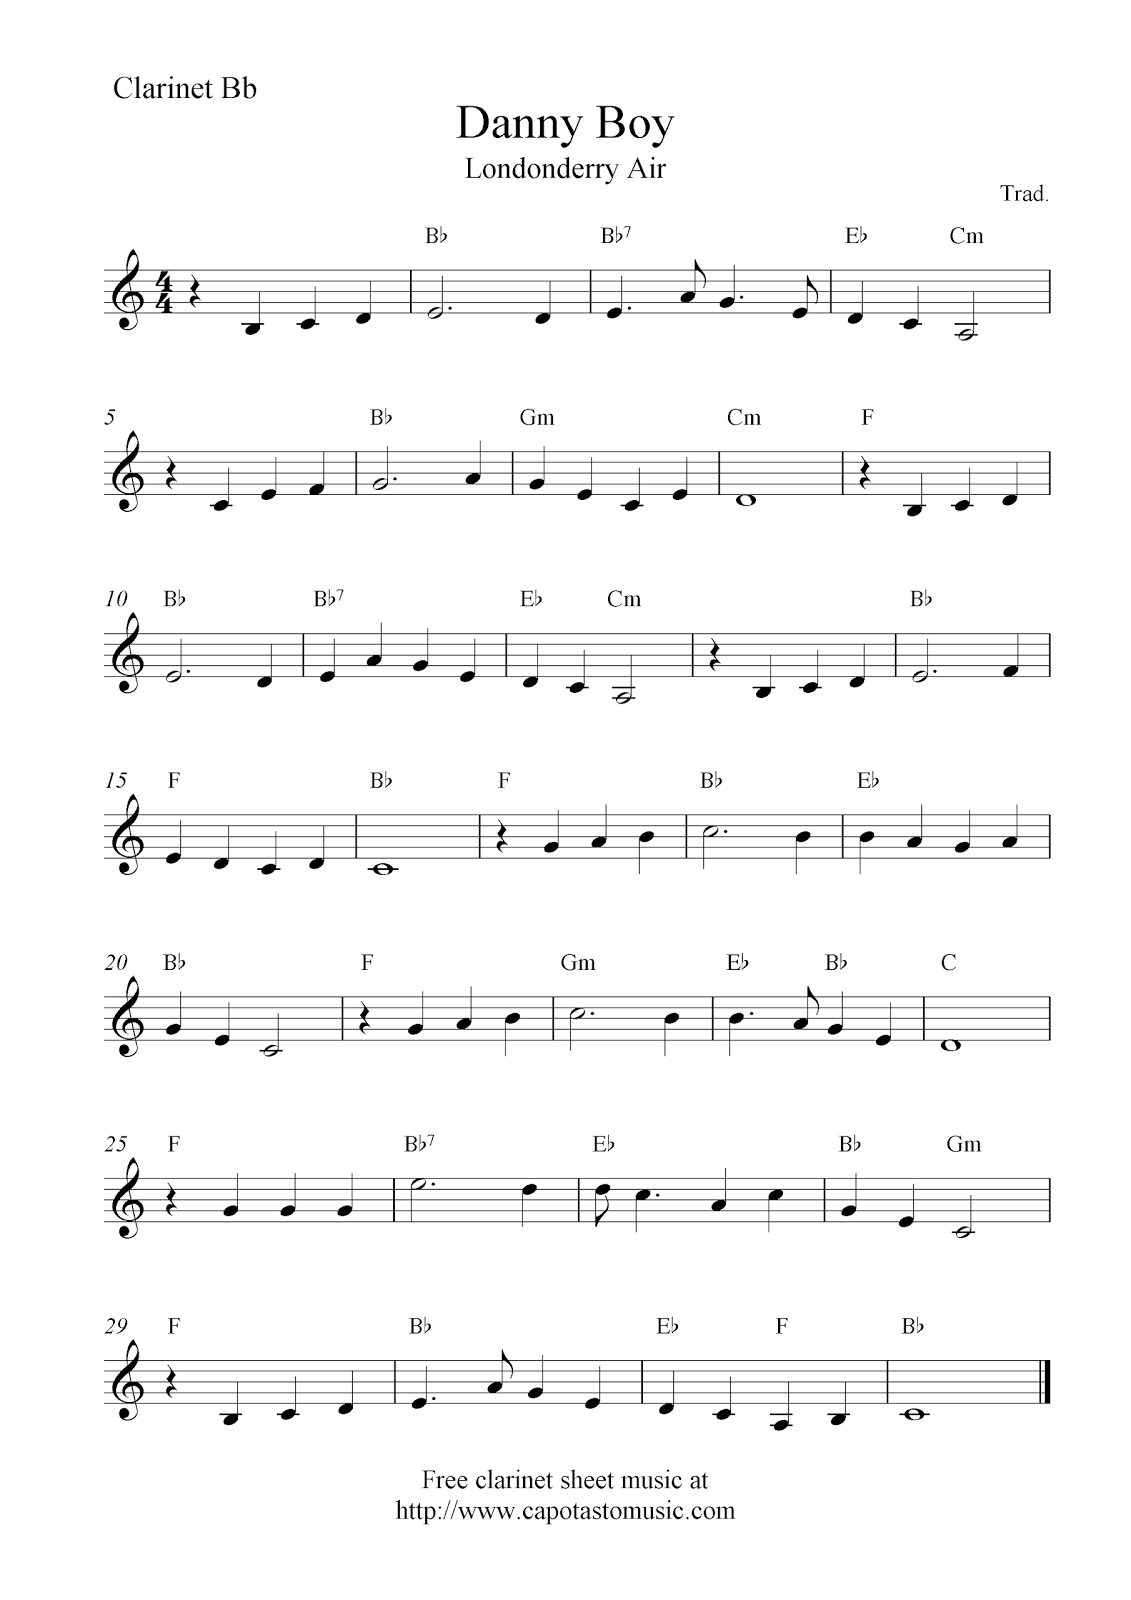 Danny Boy (Londonderry Air), Free Clarinet Sheet Music Notes - Free Sheet Music For Clarinet Printable